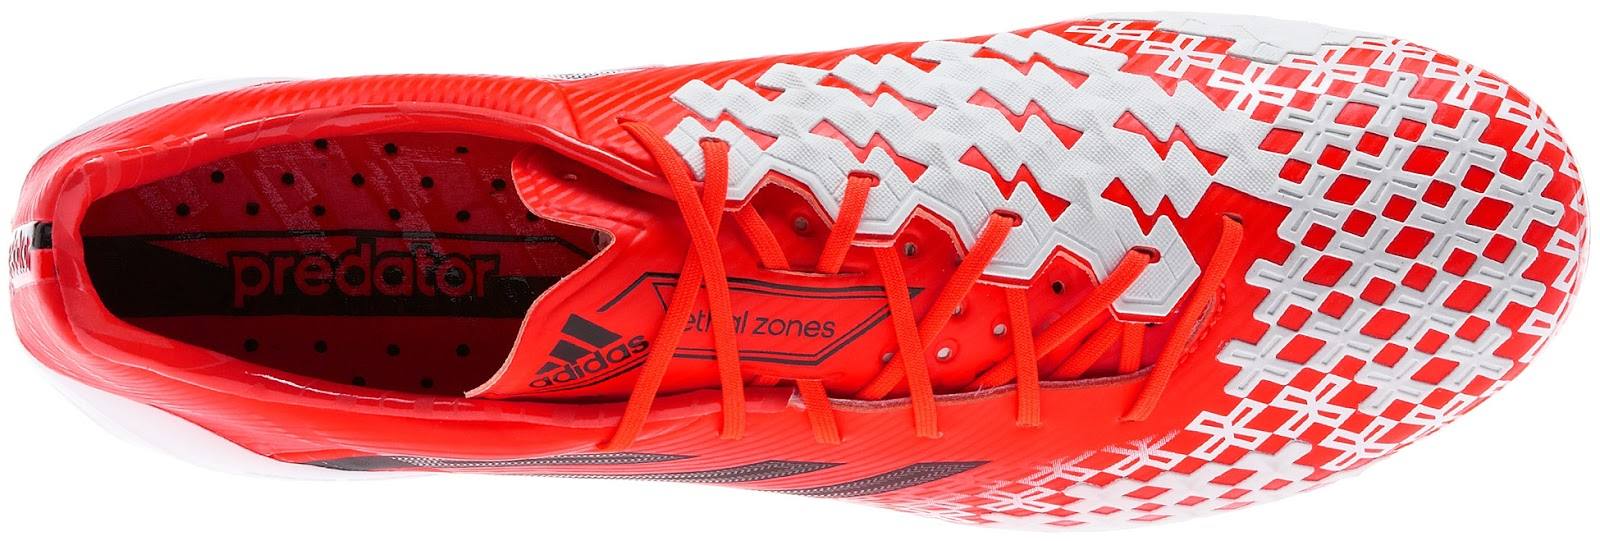 Adidas-Predator-LZ-II-Boots-Red-White-SL-4